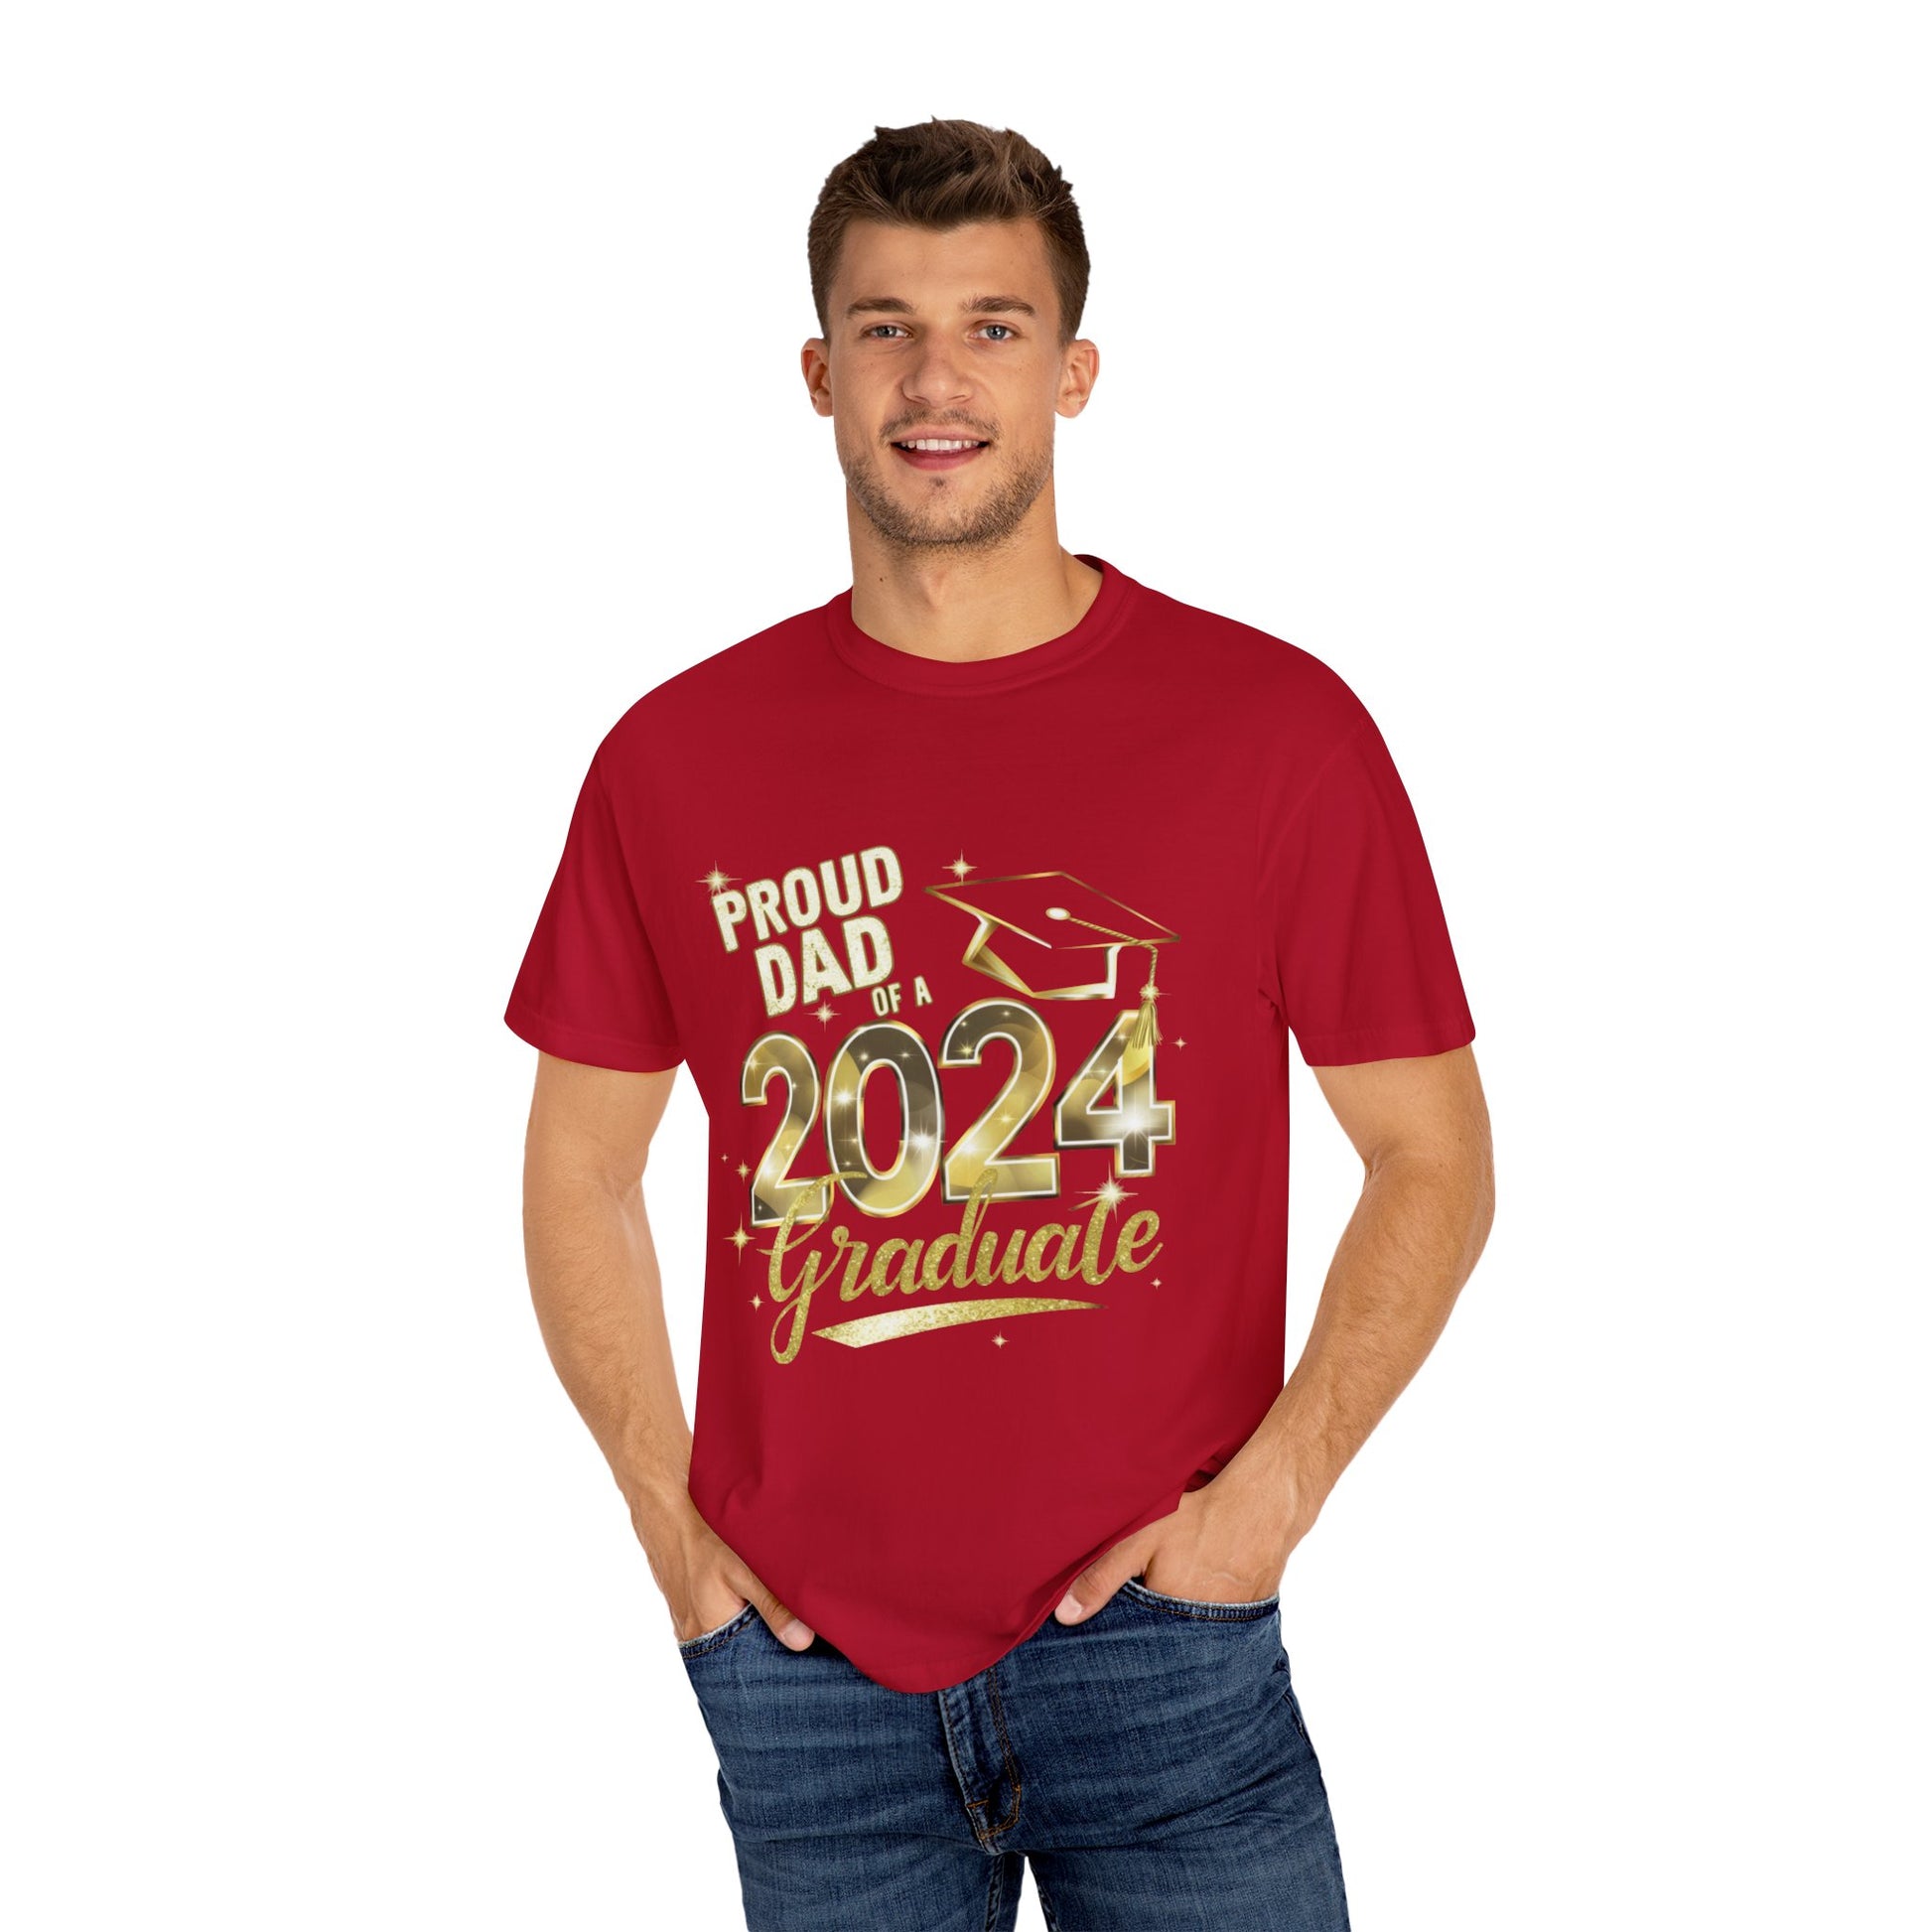 Proud of Dad 2024 Graduate Unisex Garment-dyed T-shirt Cotton Funny Humorous Graphic Soft Premium Unisex Men Women Red T-shirt Birthday Gift-21